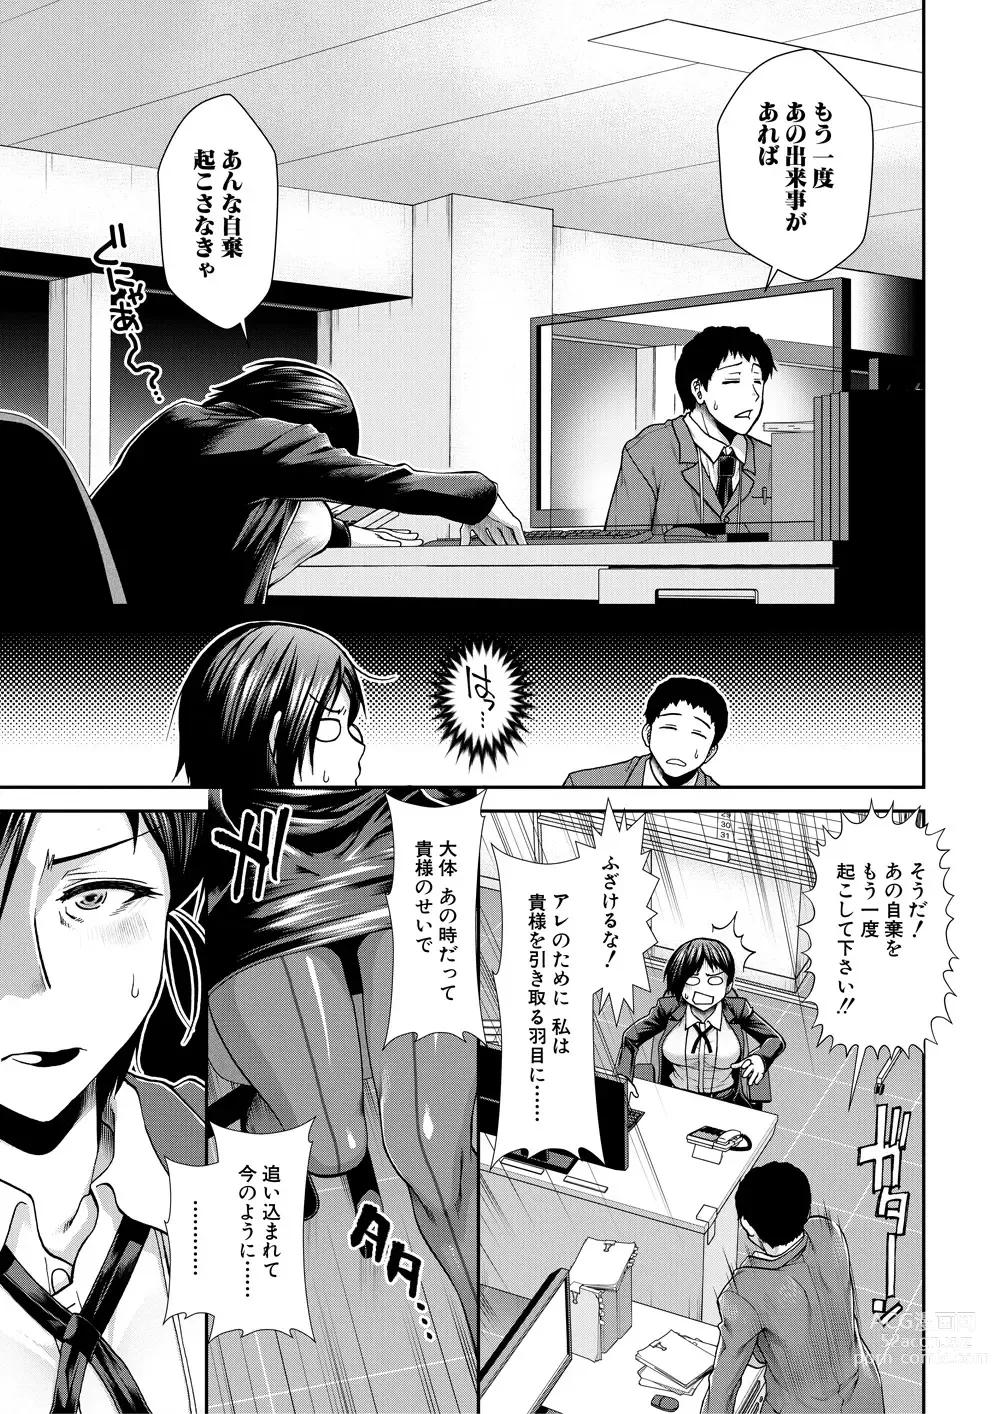 Page 7 of manga Ketsuhara